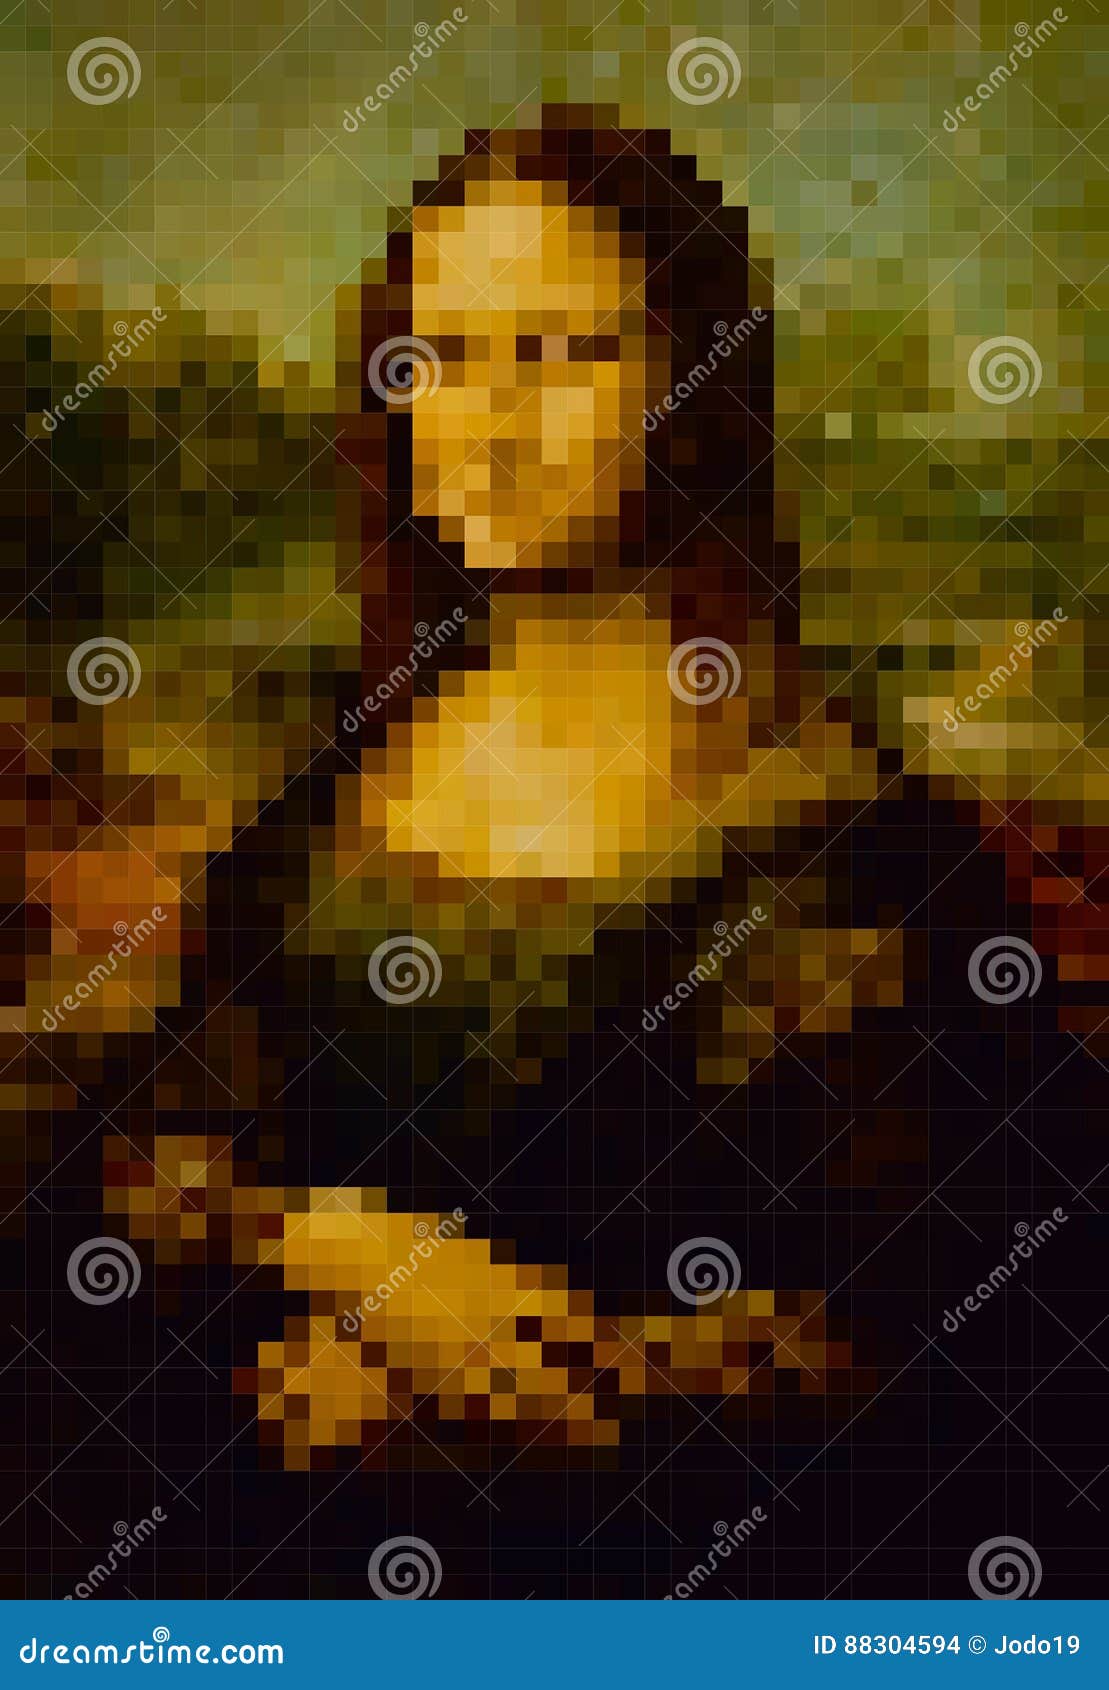 Mona lisa pixel art 32x32